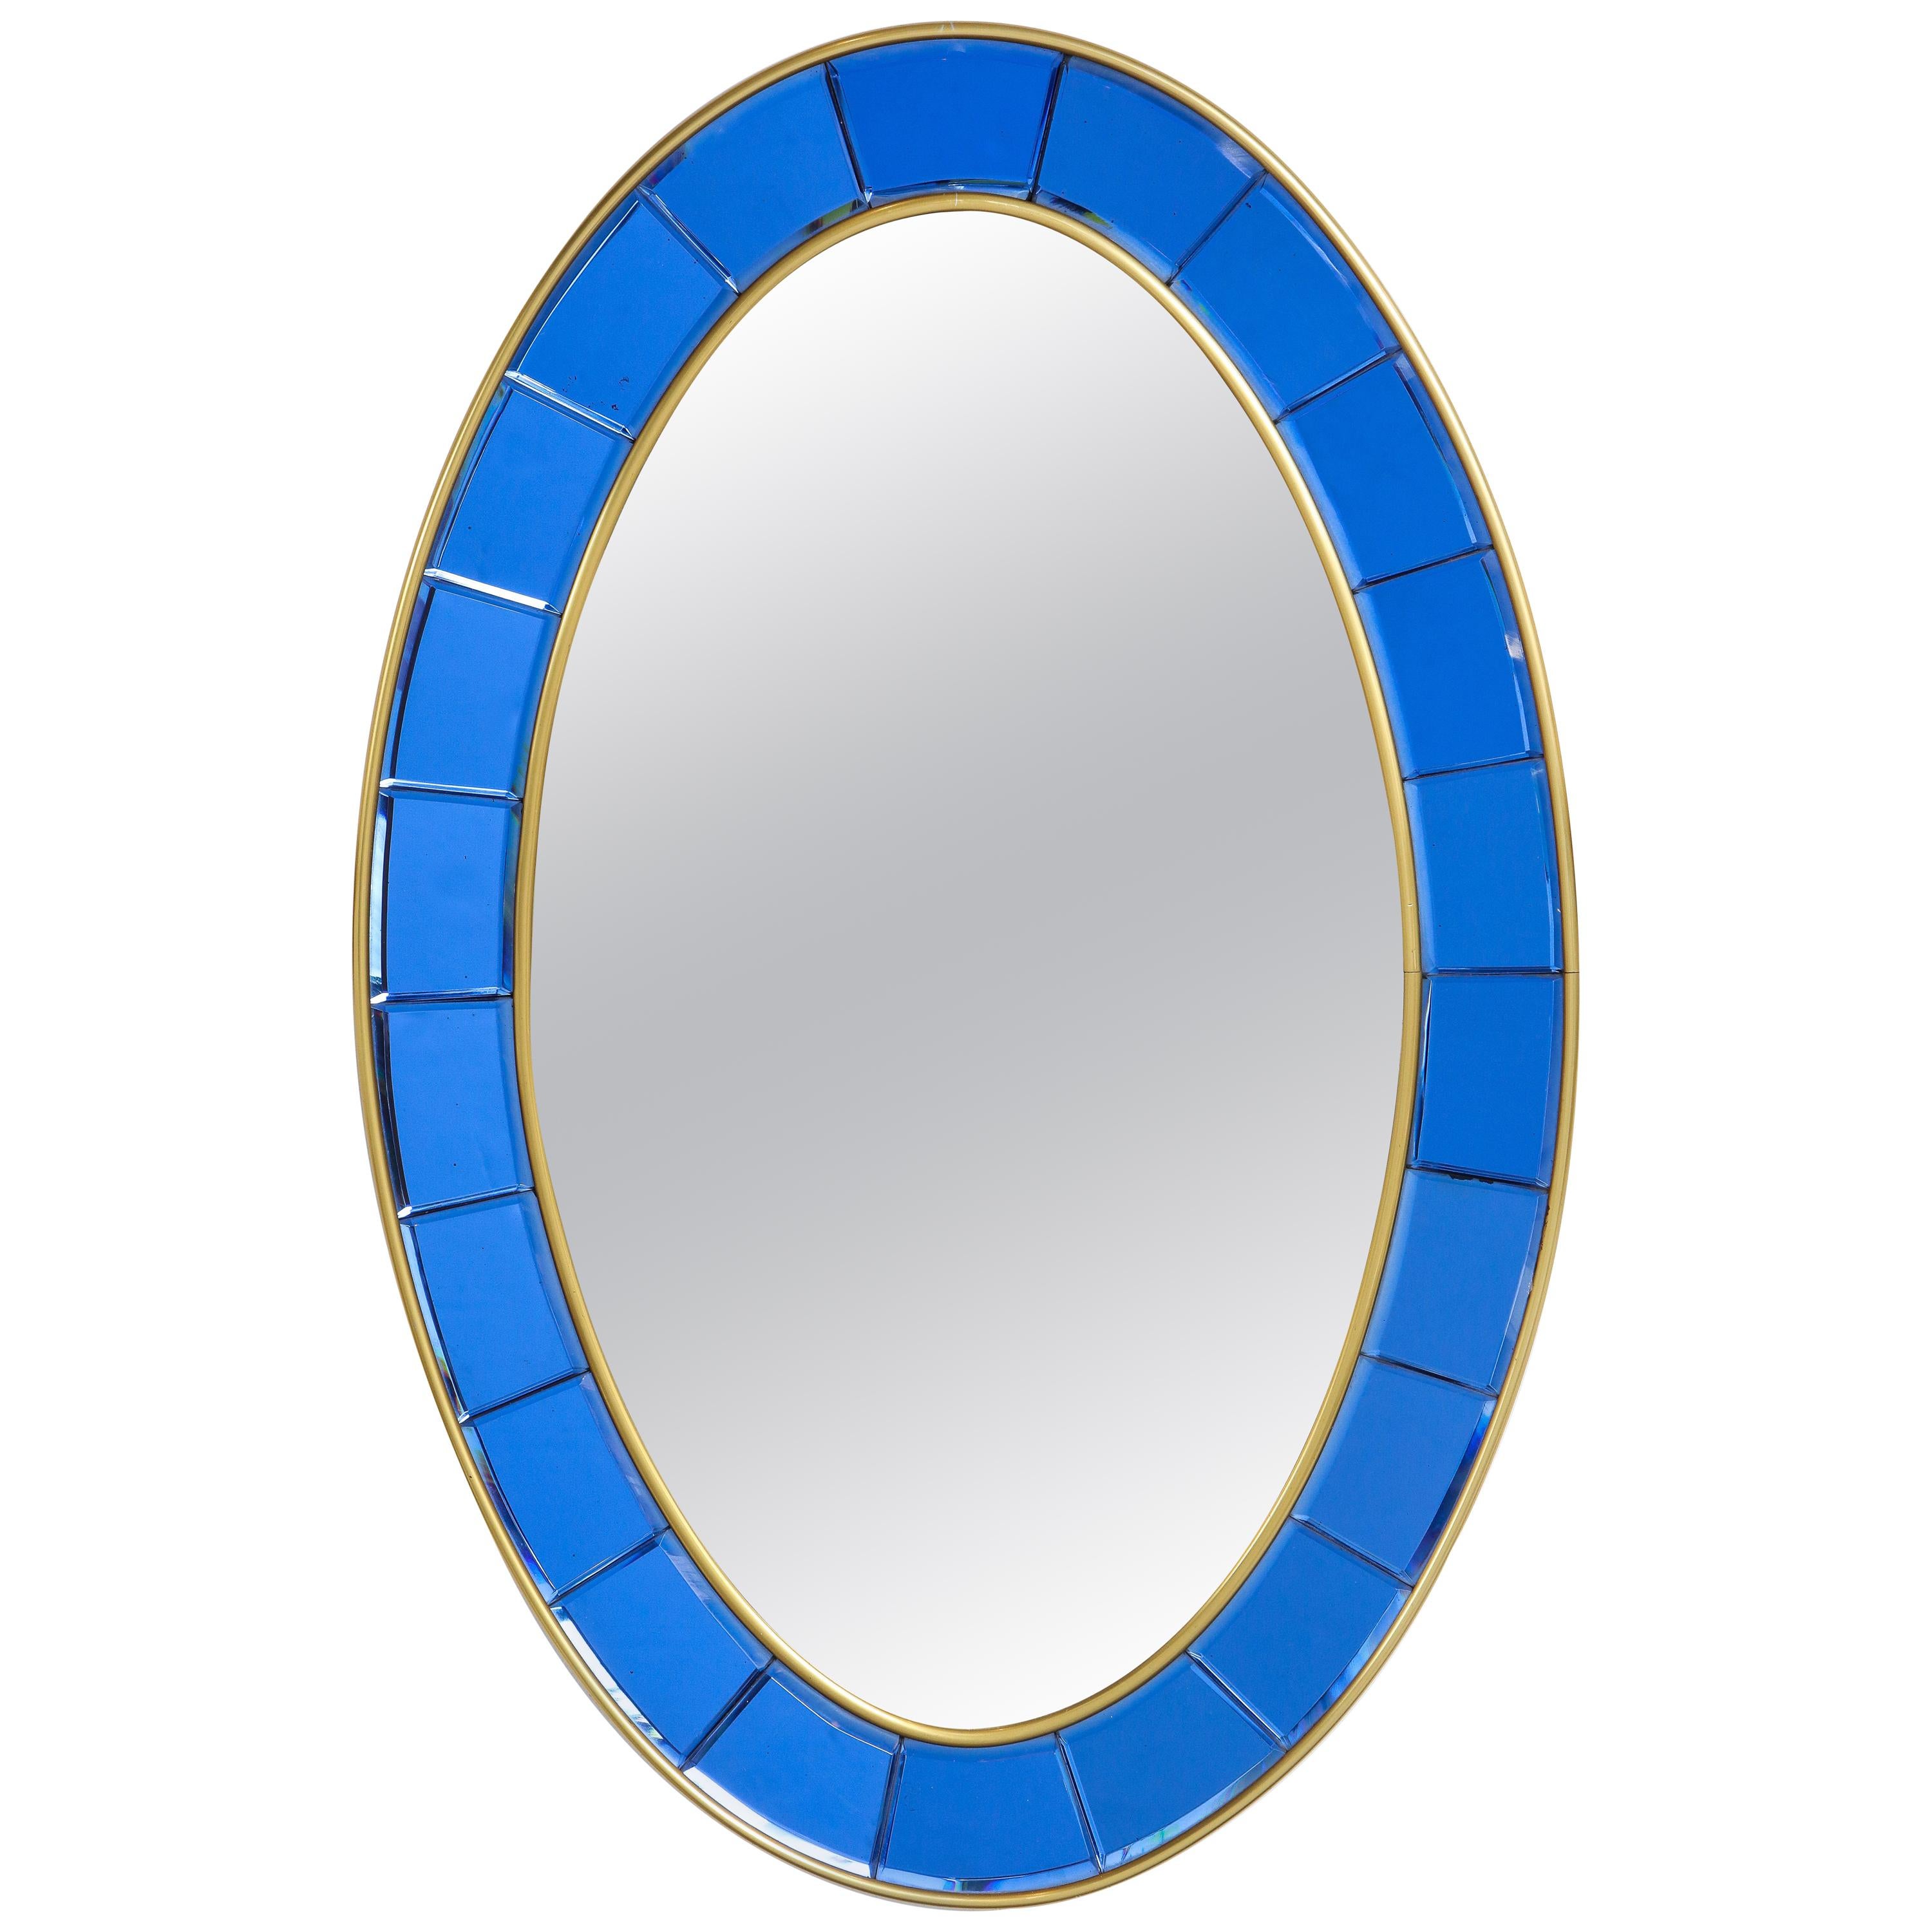 Cristal Art Oval Blue Hand-Cut Beveled Glass Mirror